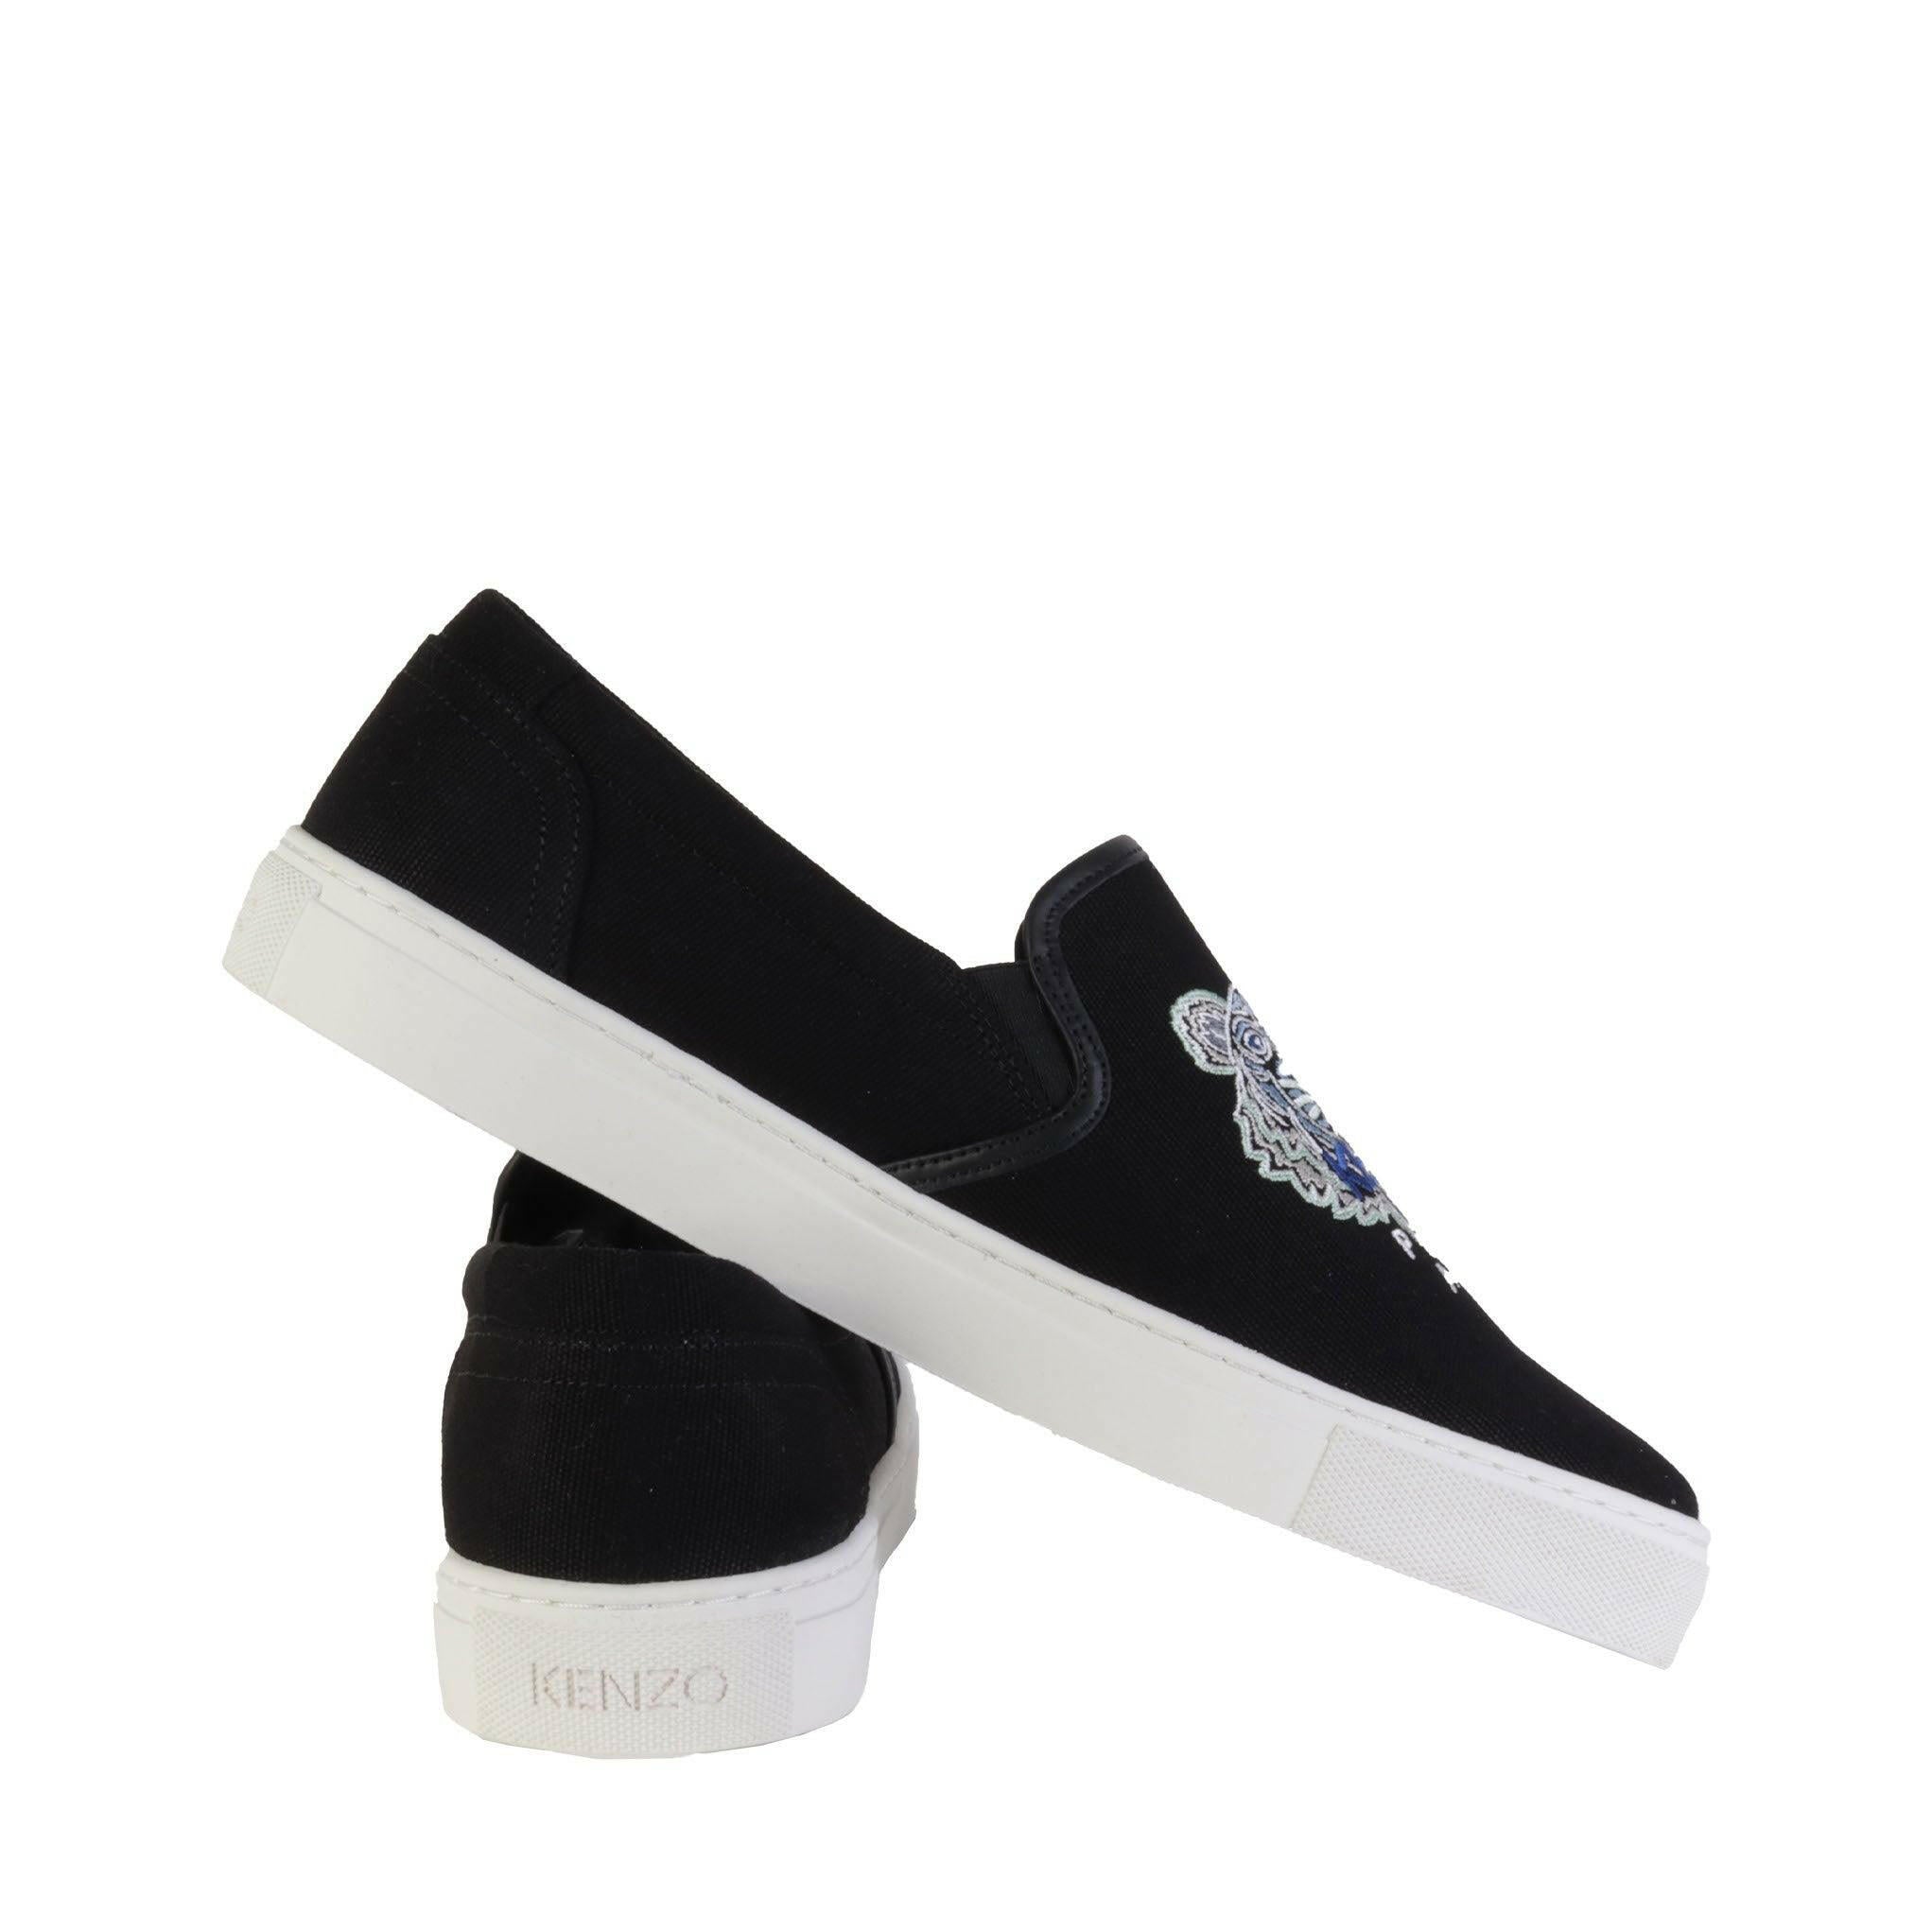 Kenzo Icon Tiger Slip-On Black Sneakers for Men - GENUINE AUTHENTIC BRAND LLC